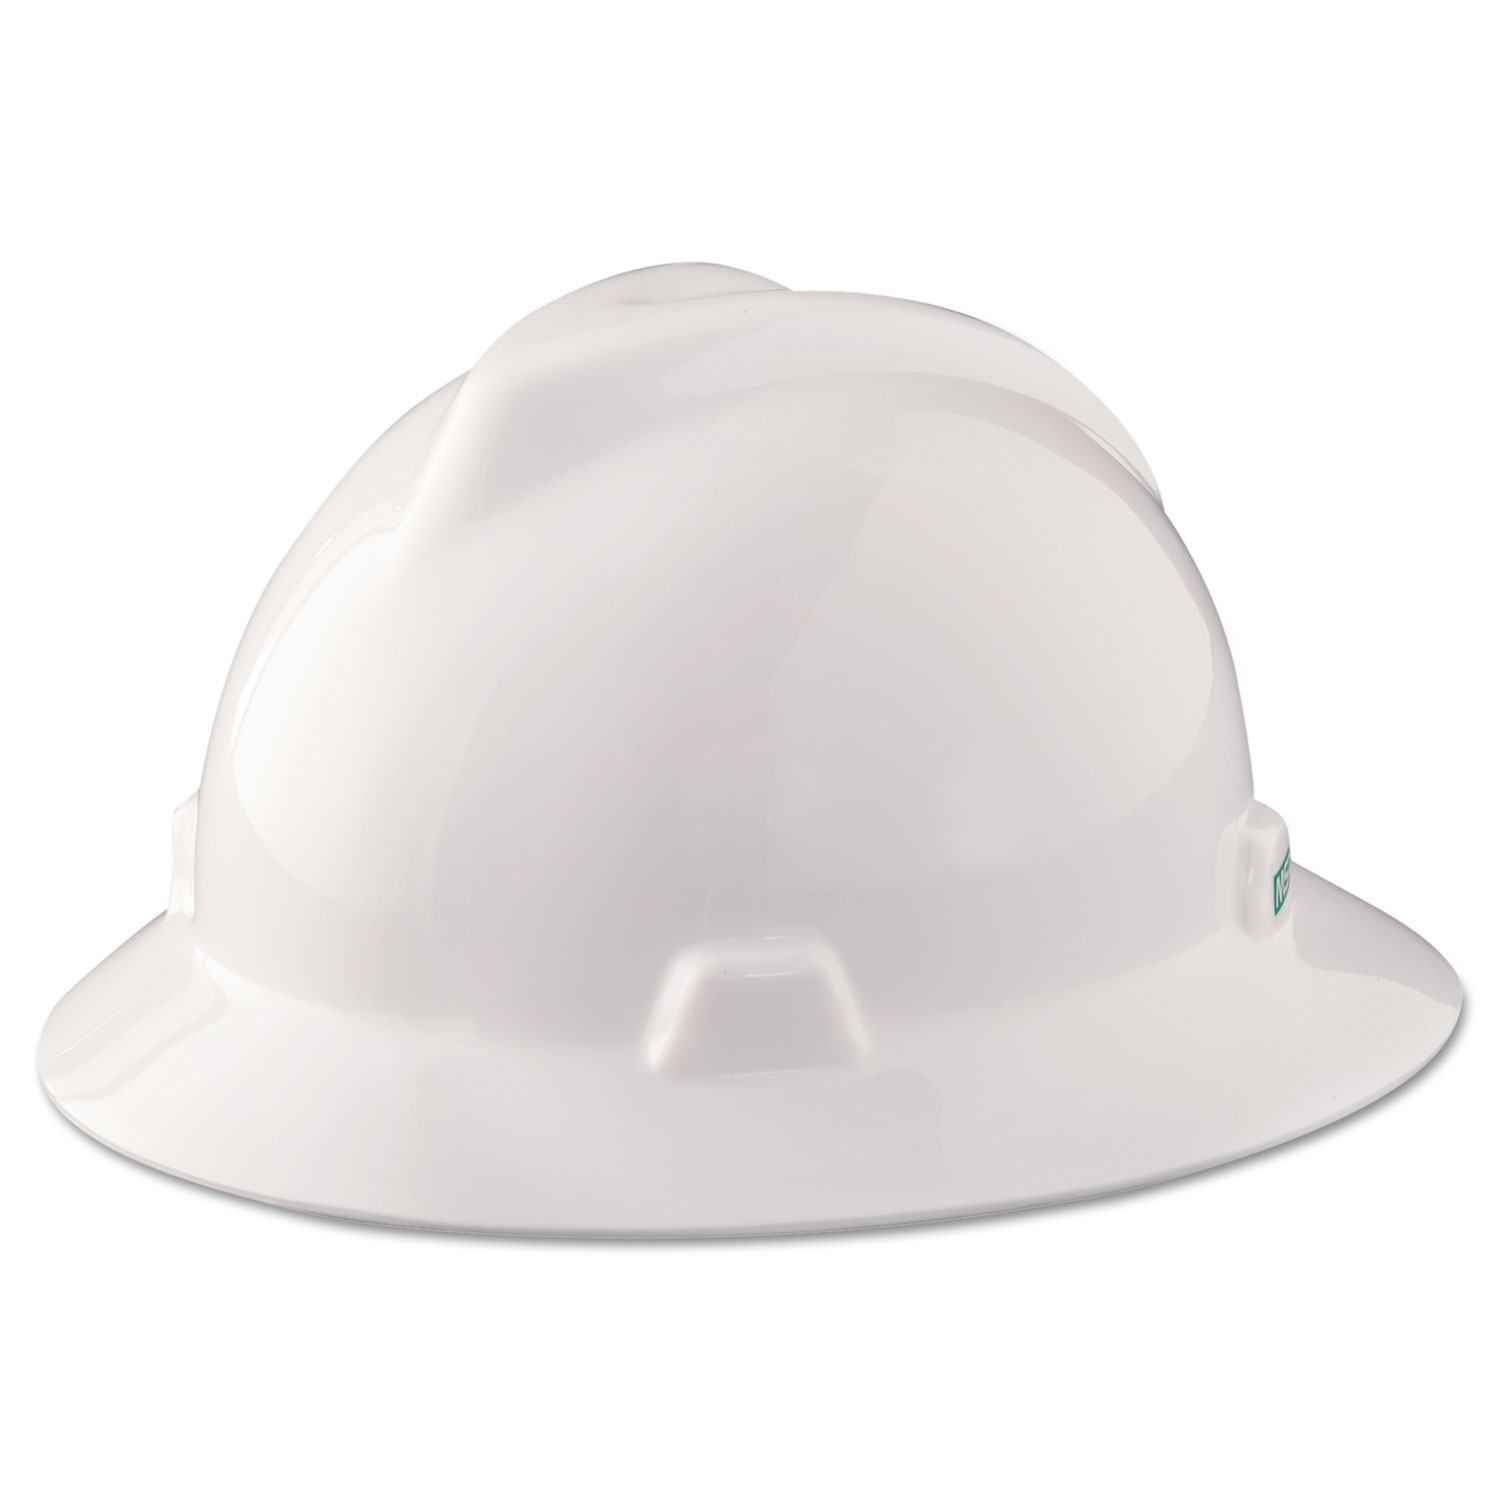 V-Gard Full-Brim Hard Hats, Staz-On Pin-Lock Suspension, Size 6 1/2 - 8, White